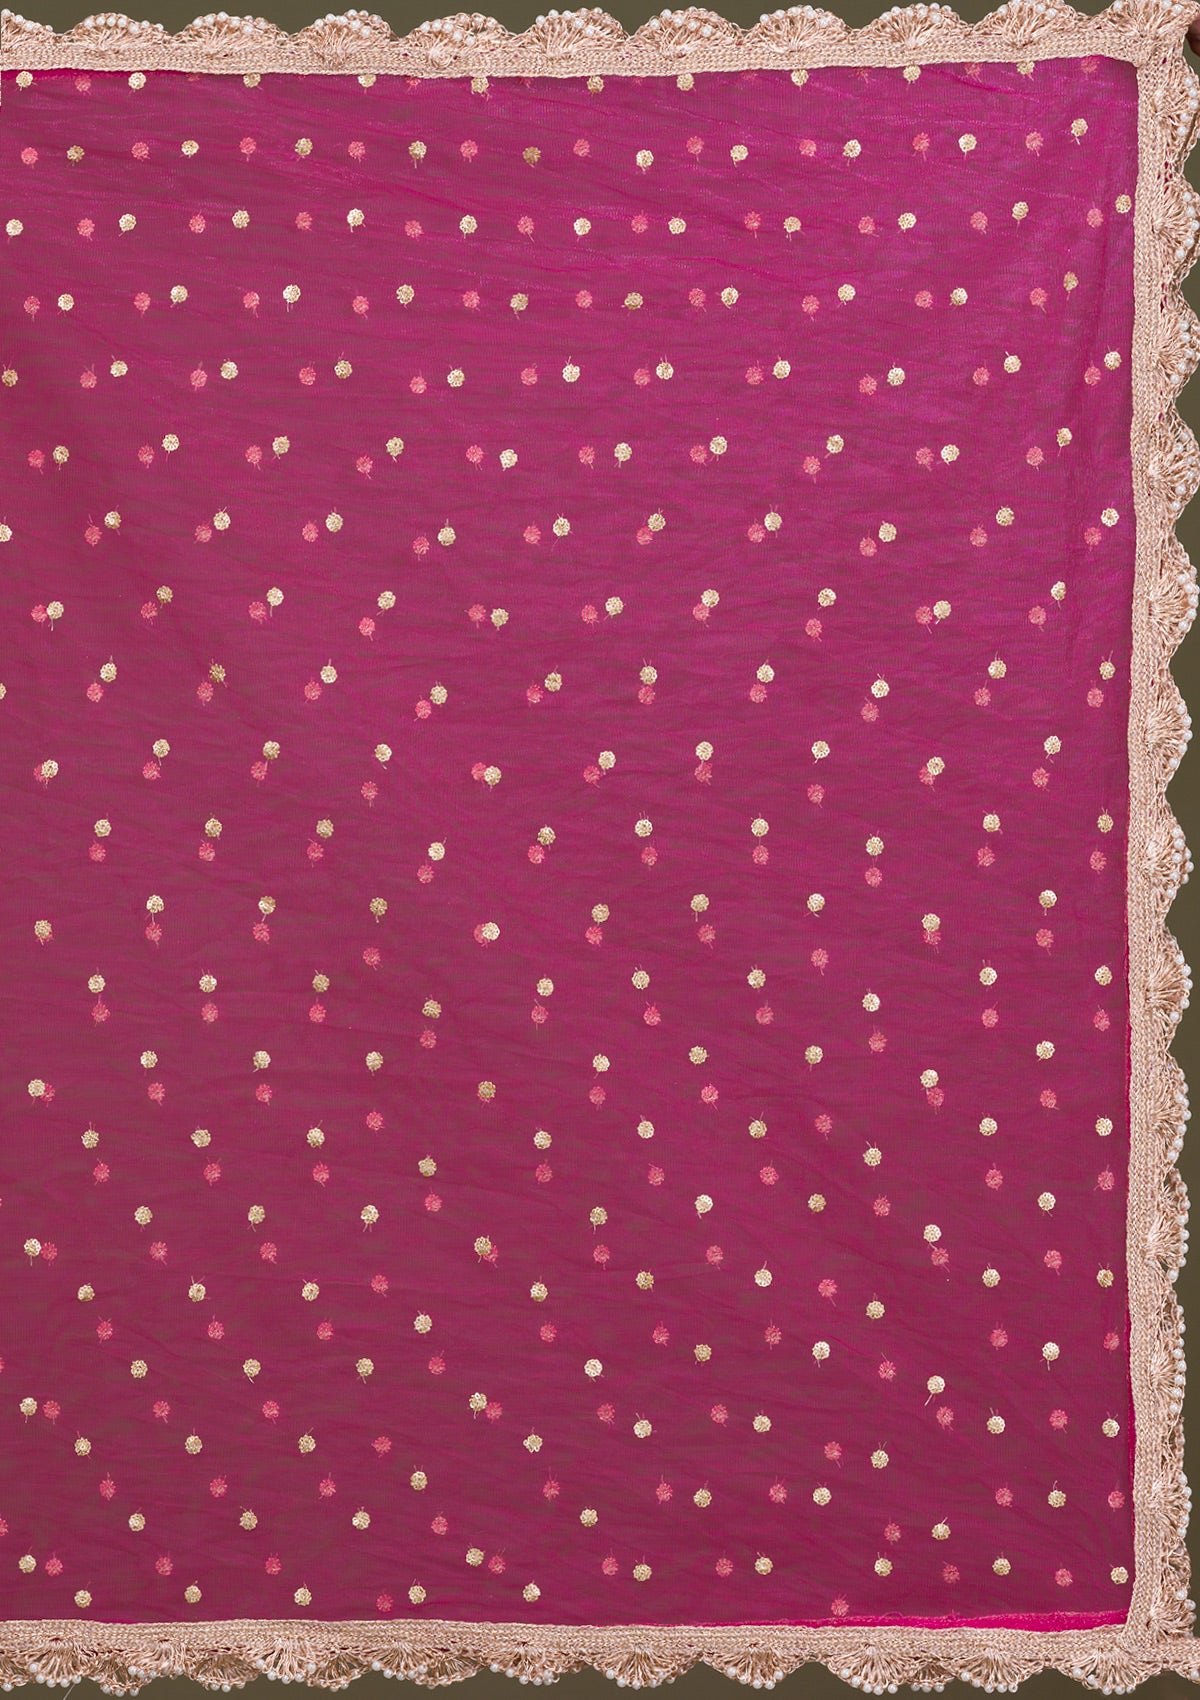 Rani Pink Cutdana Georgette Readymade Salwar Suit